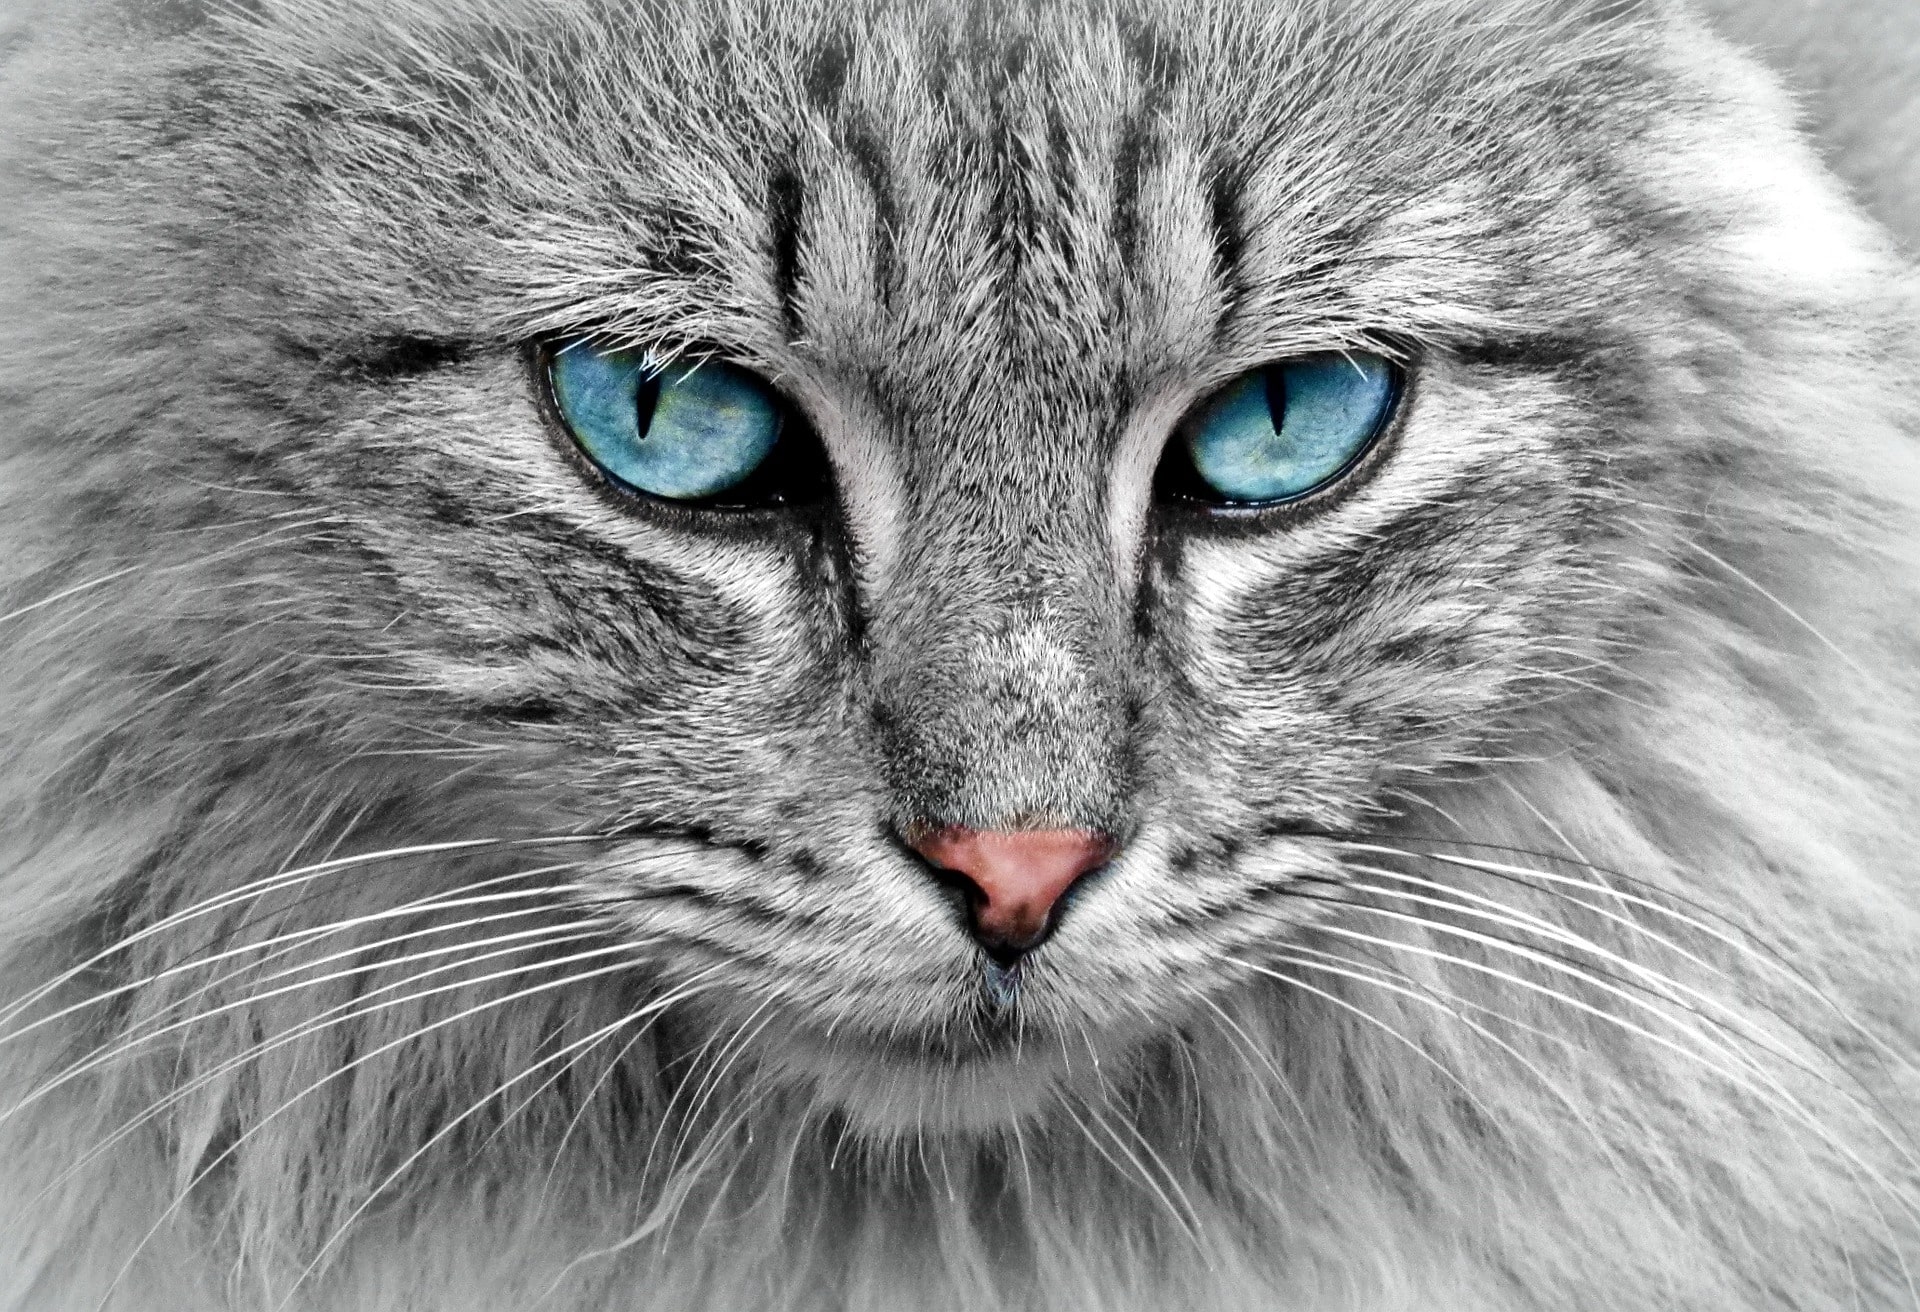 Close-up portrait image of a blue-eyed cat.